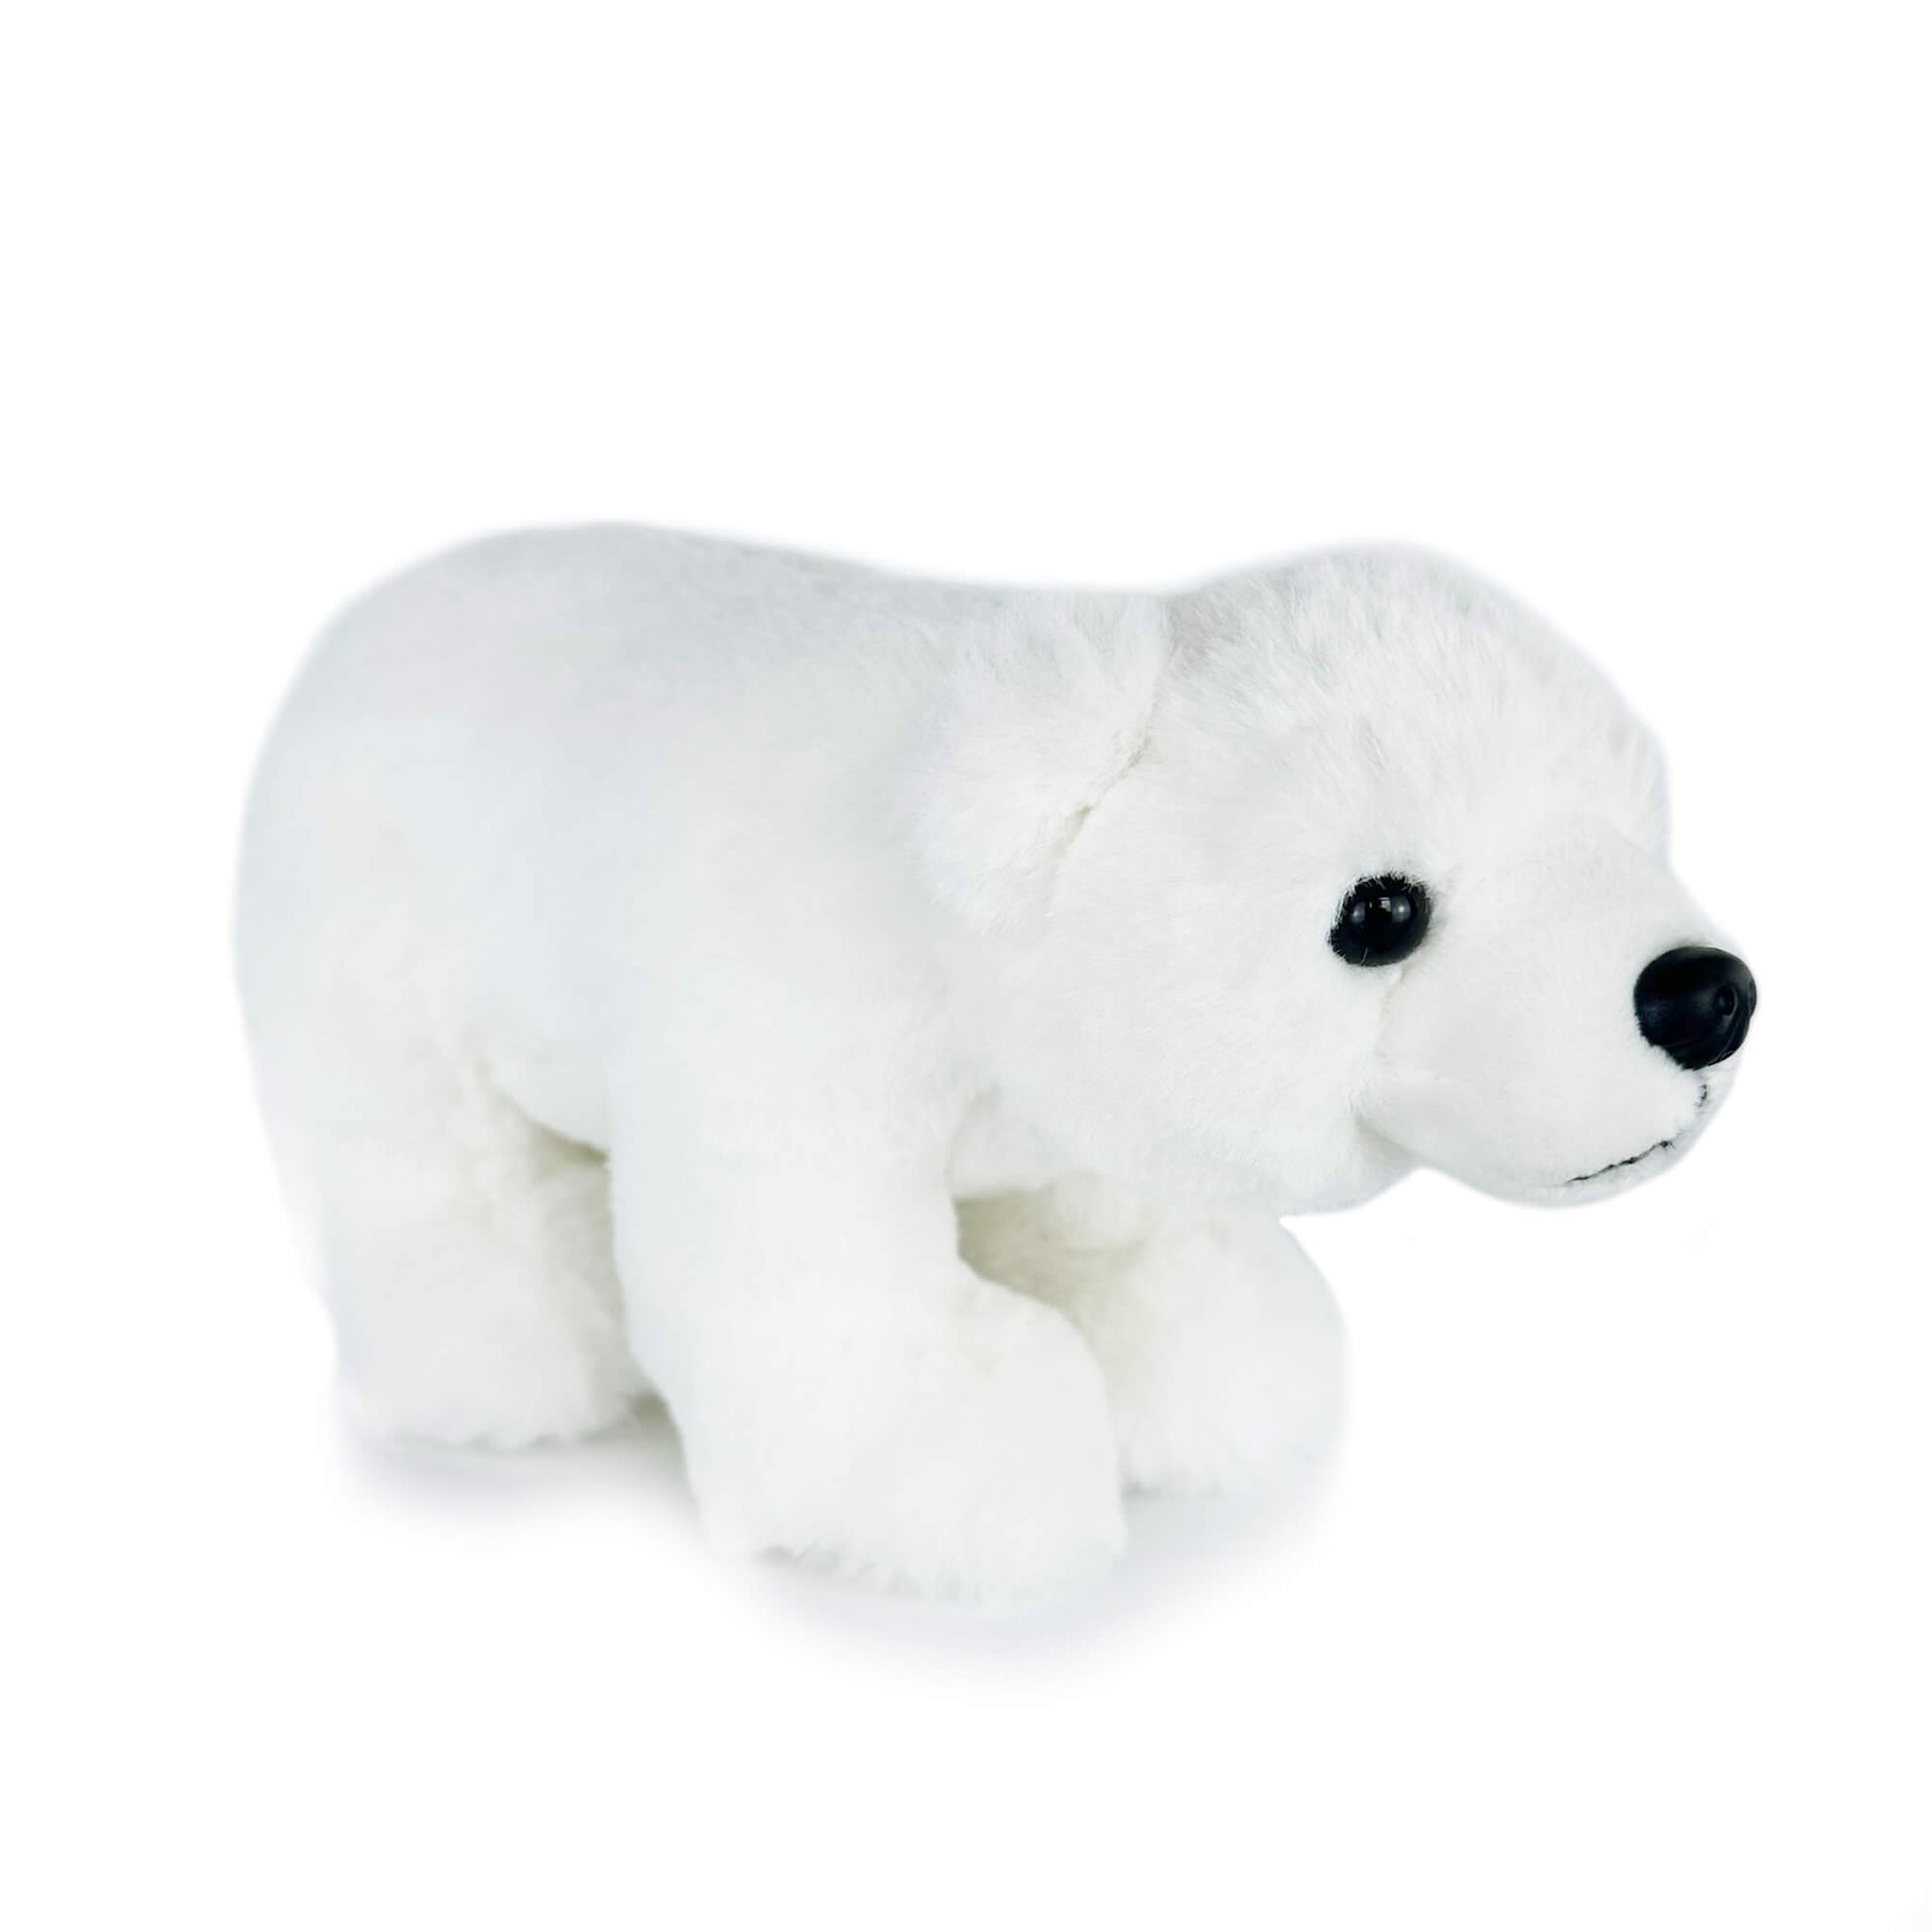 Cute white polar bear stuffed animal PlushThis